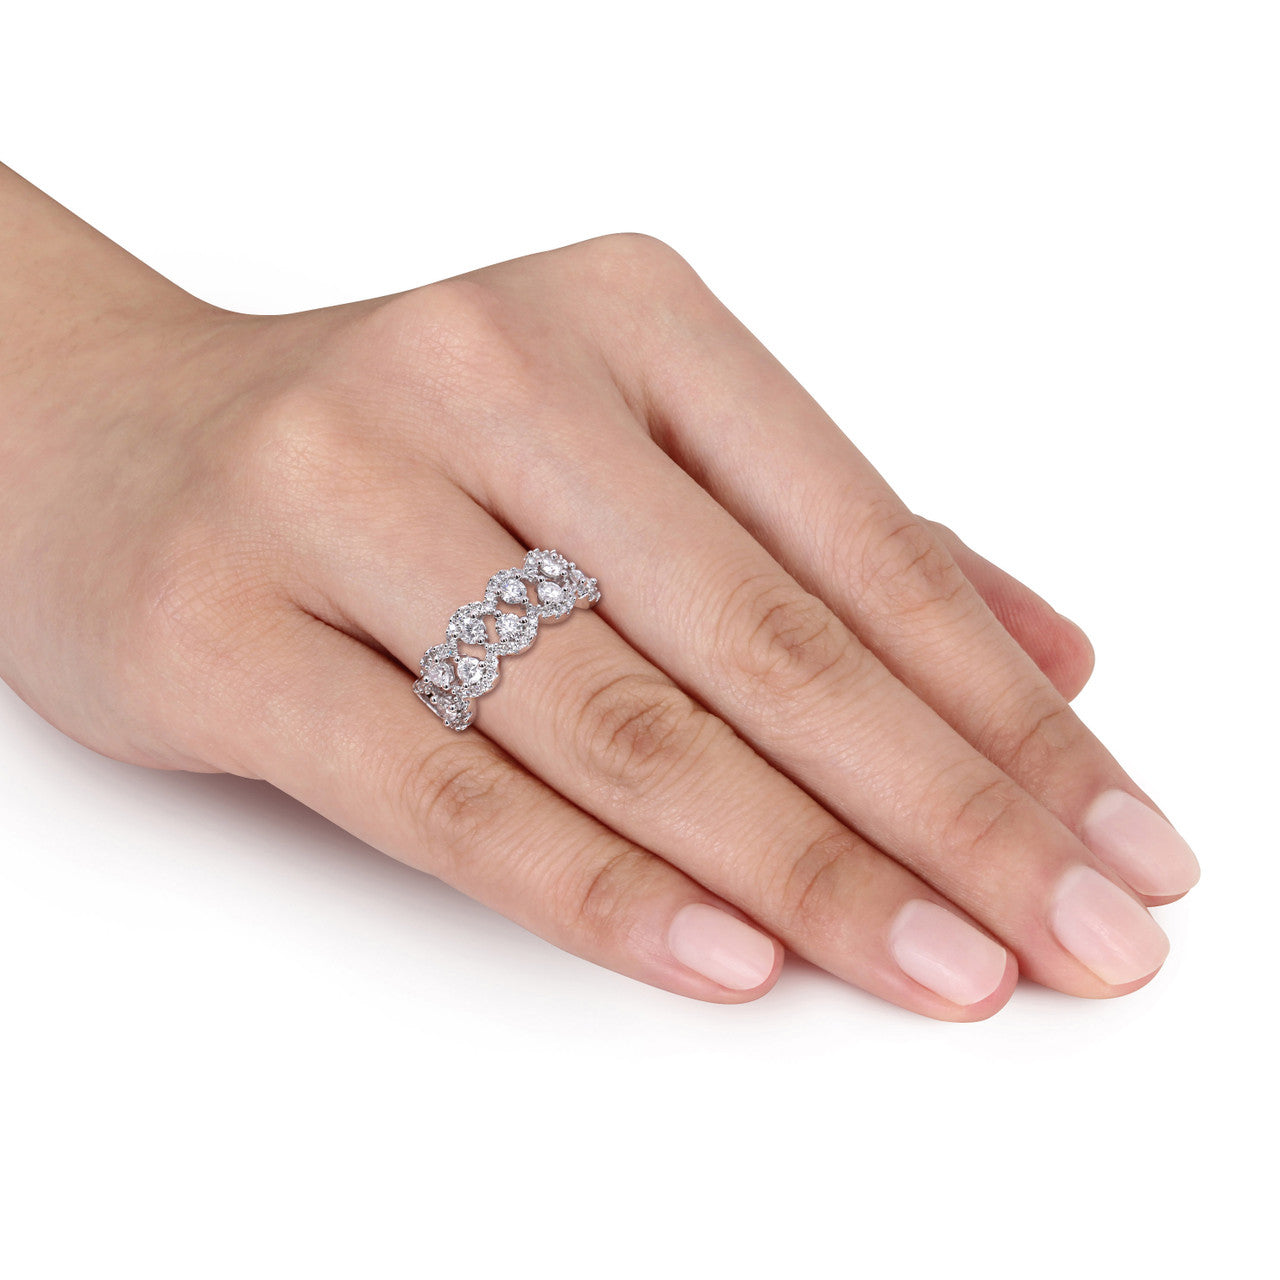 Ice Jewellery 1 CT Diamond Anniversary Ring in 14k White Gold - 75000005697 | Ice Jewellery Australia